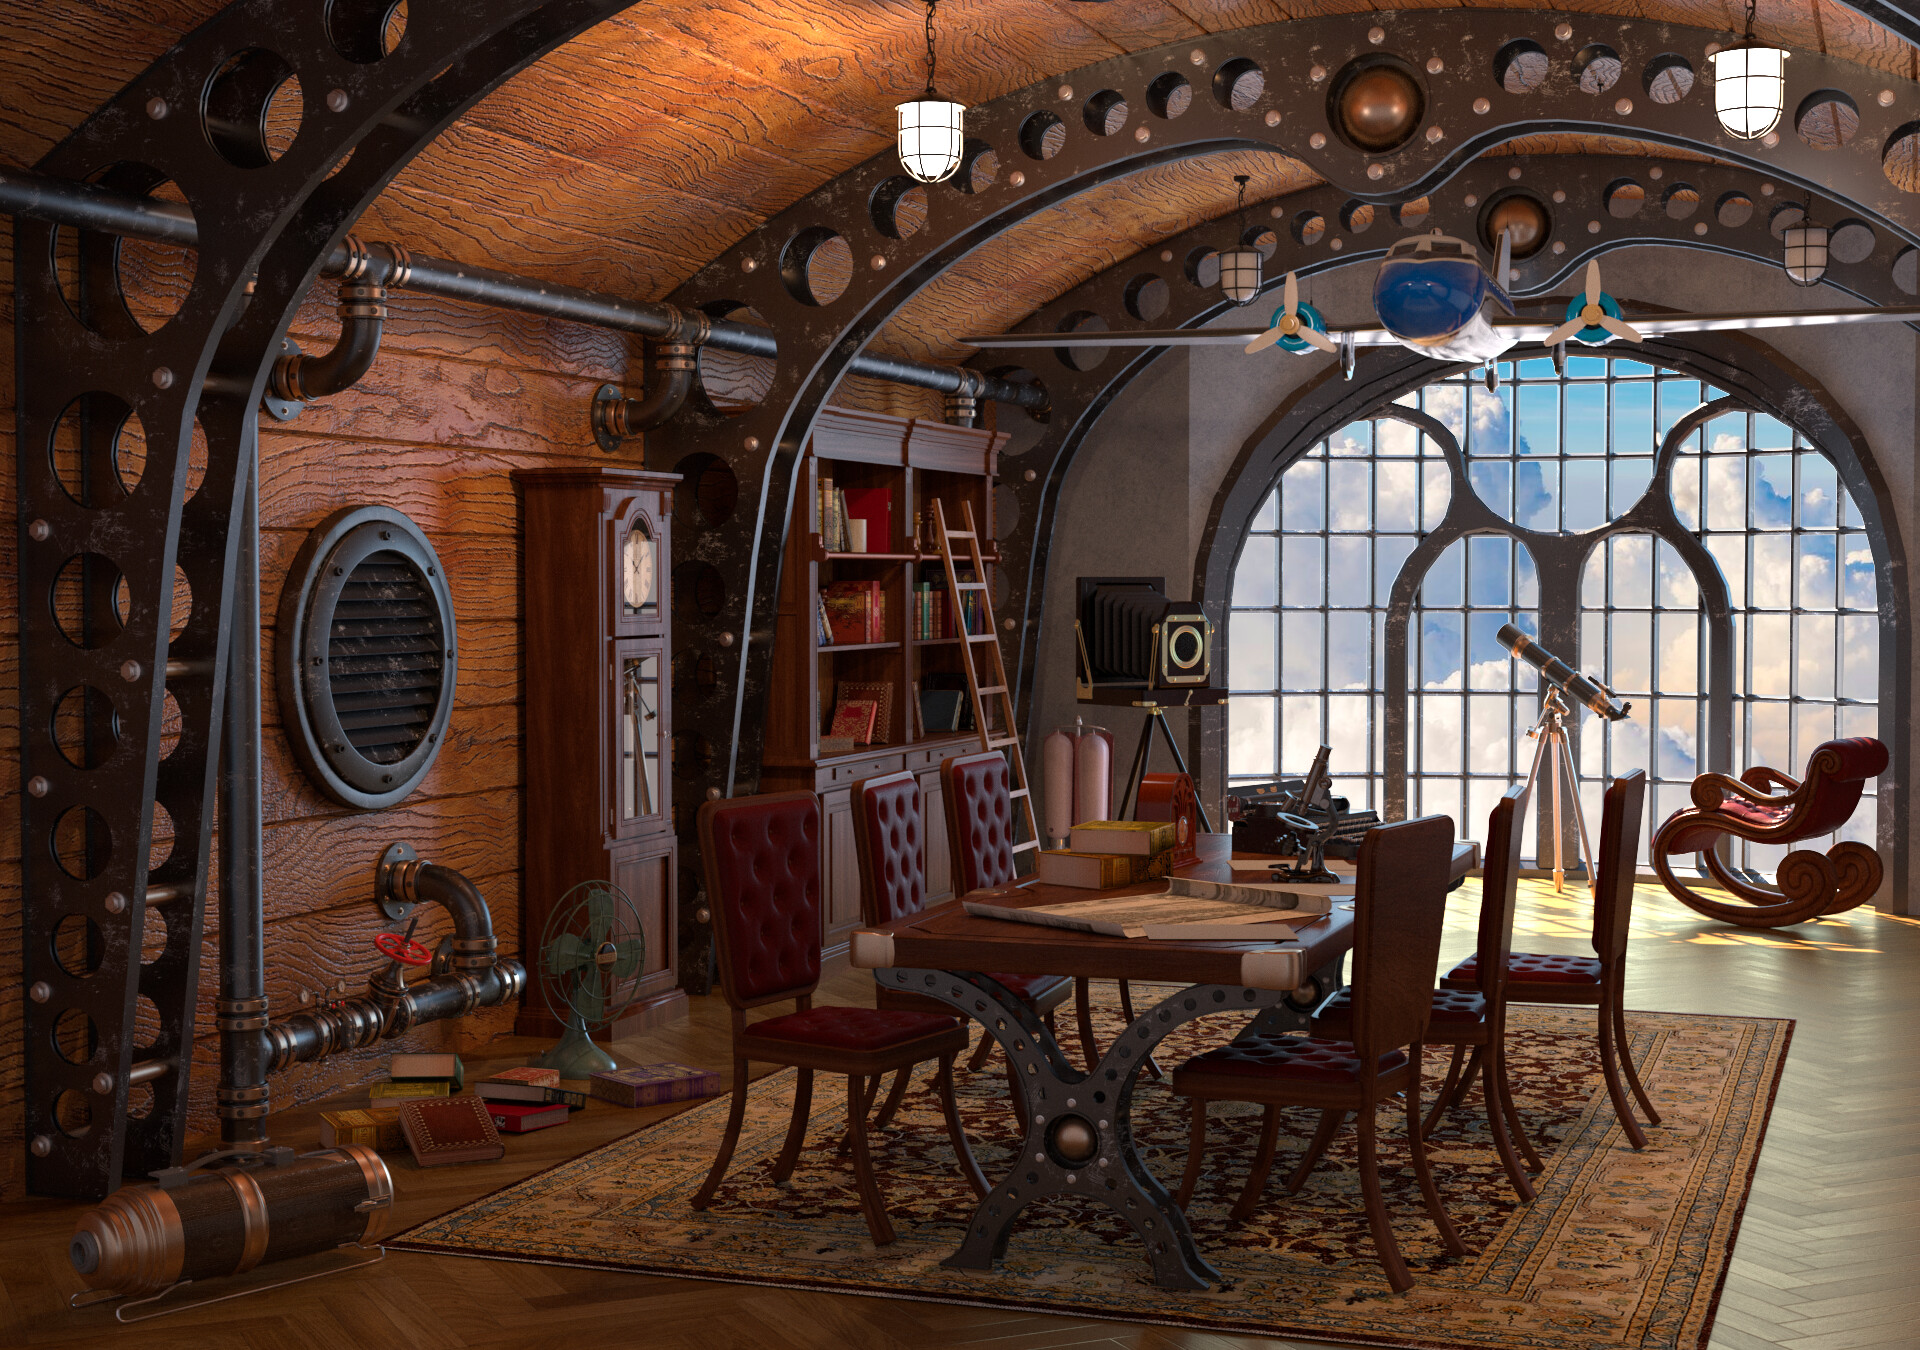 ArtStation - Steampunk-style meeting room interior